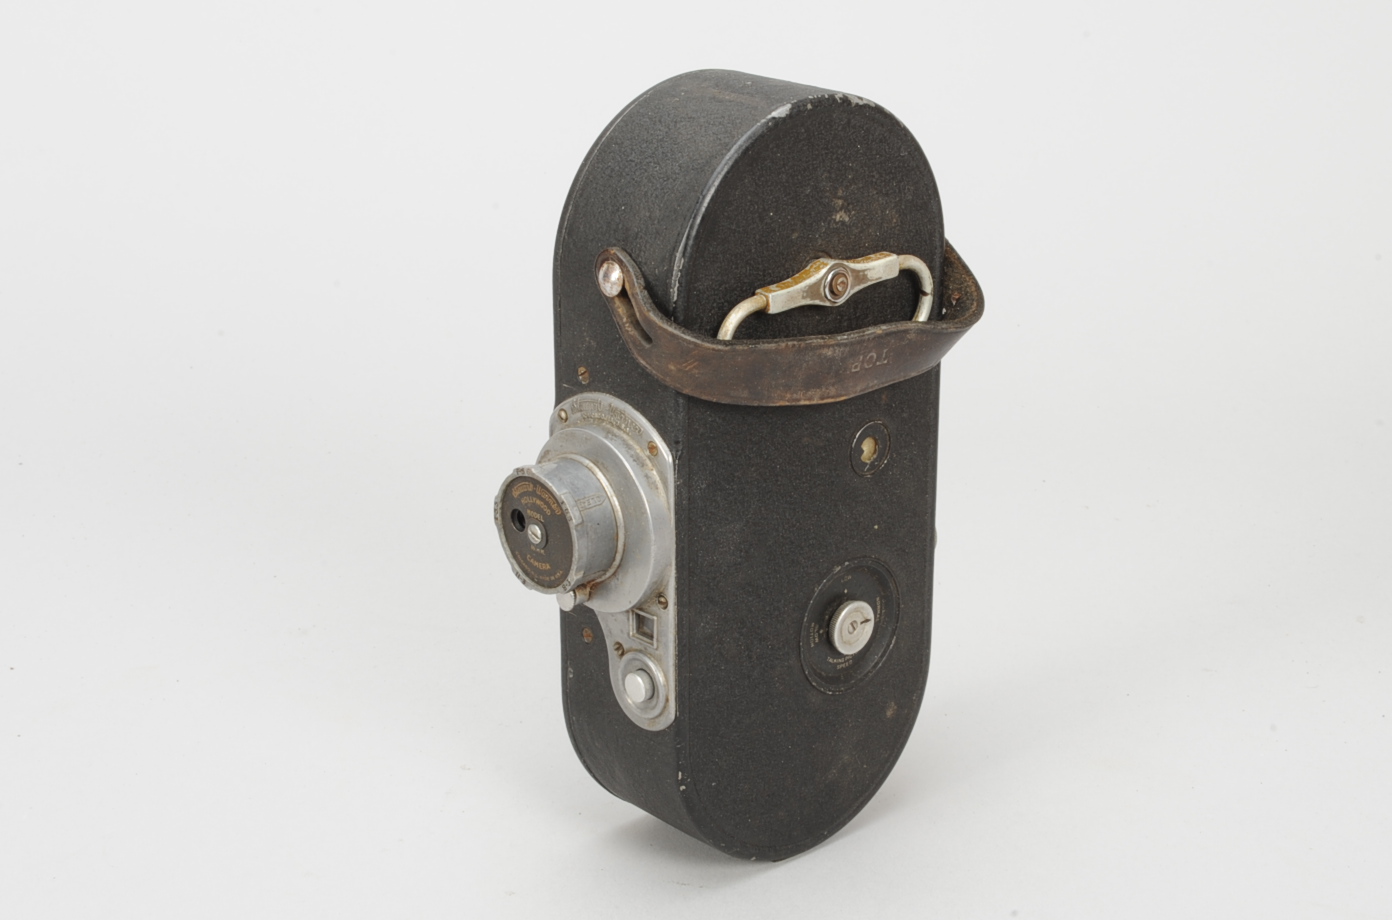 A Stewart-Warner 531-B 16mm Camera, 1930s, serial no. 32967X, body F, spring motor working, 4 speeds